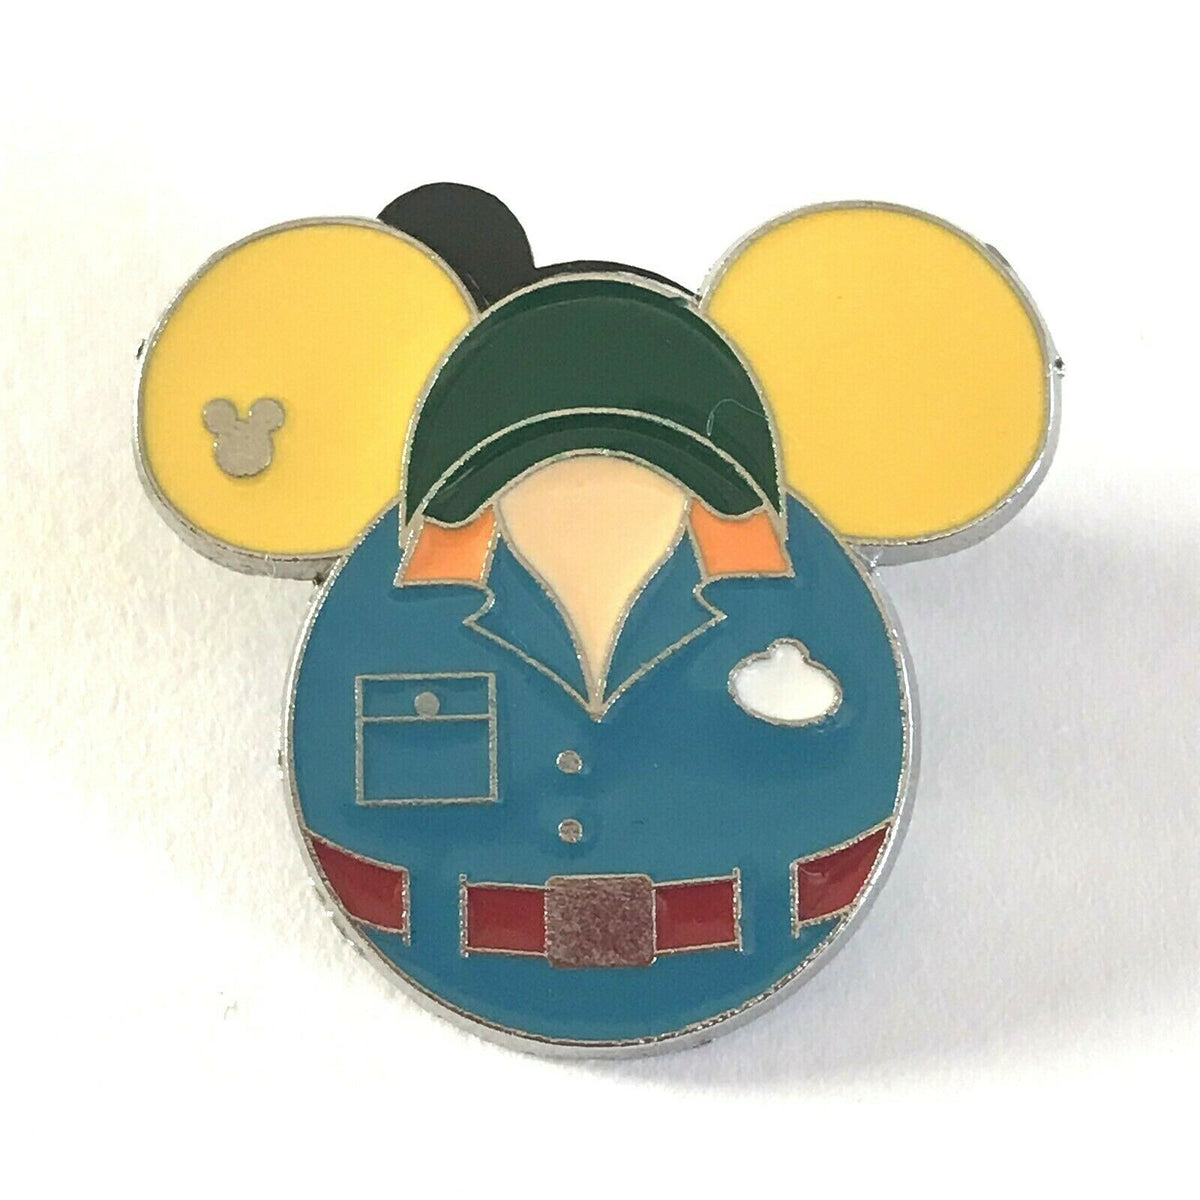 Details On The 2015 Disney Visa® Cardmember Pin – Captain Hook's Treasure  Chest –